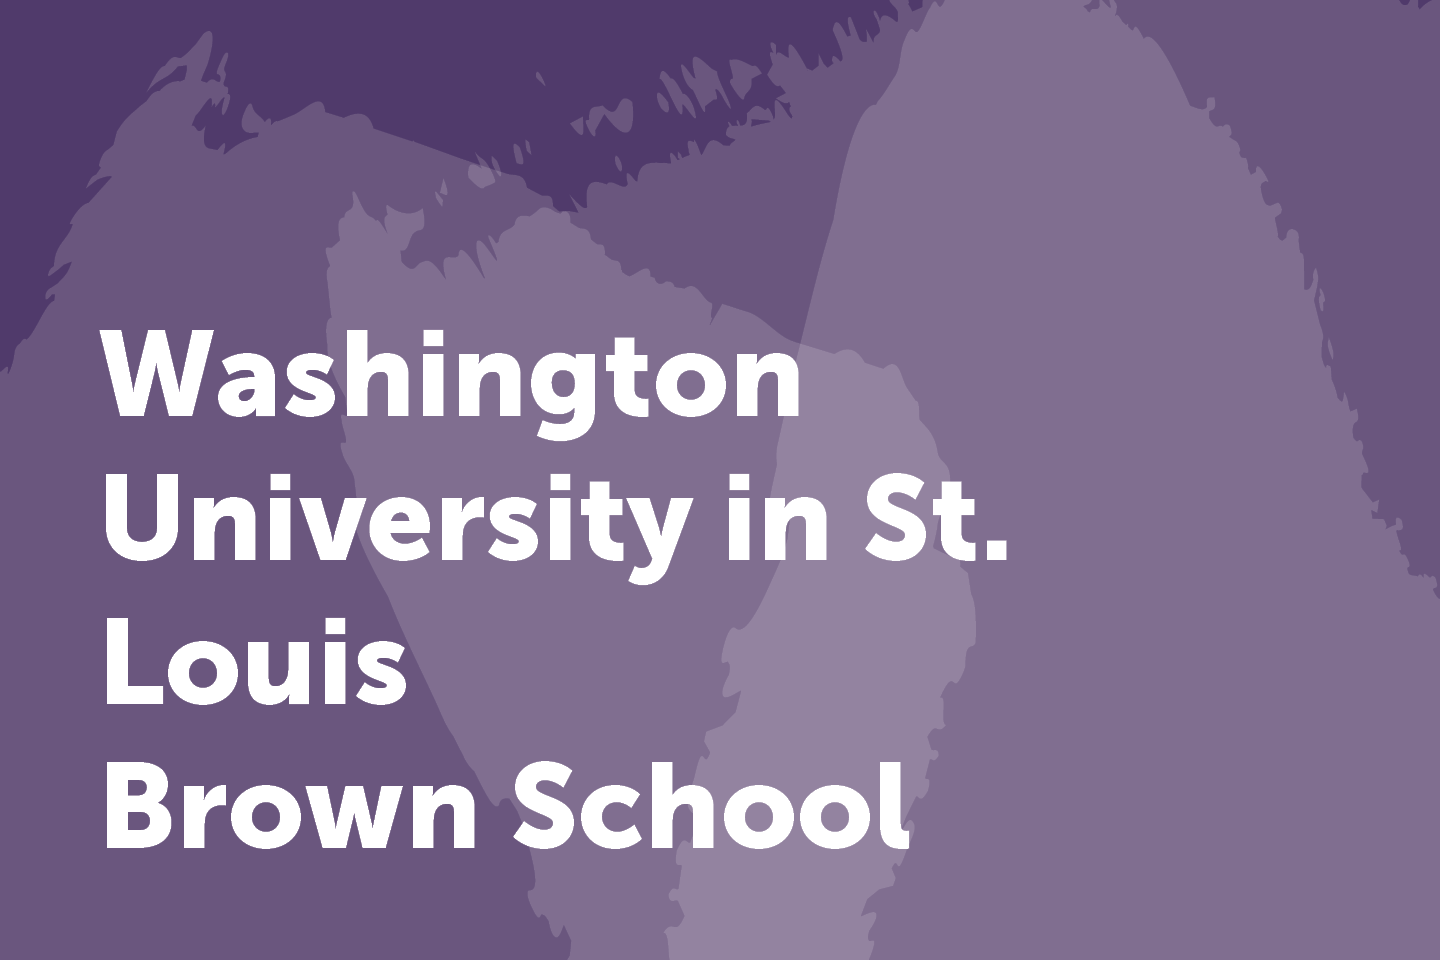 Washington University in St. Louis, Brown School